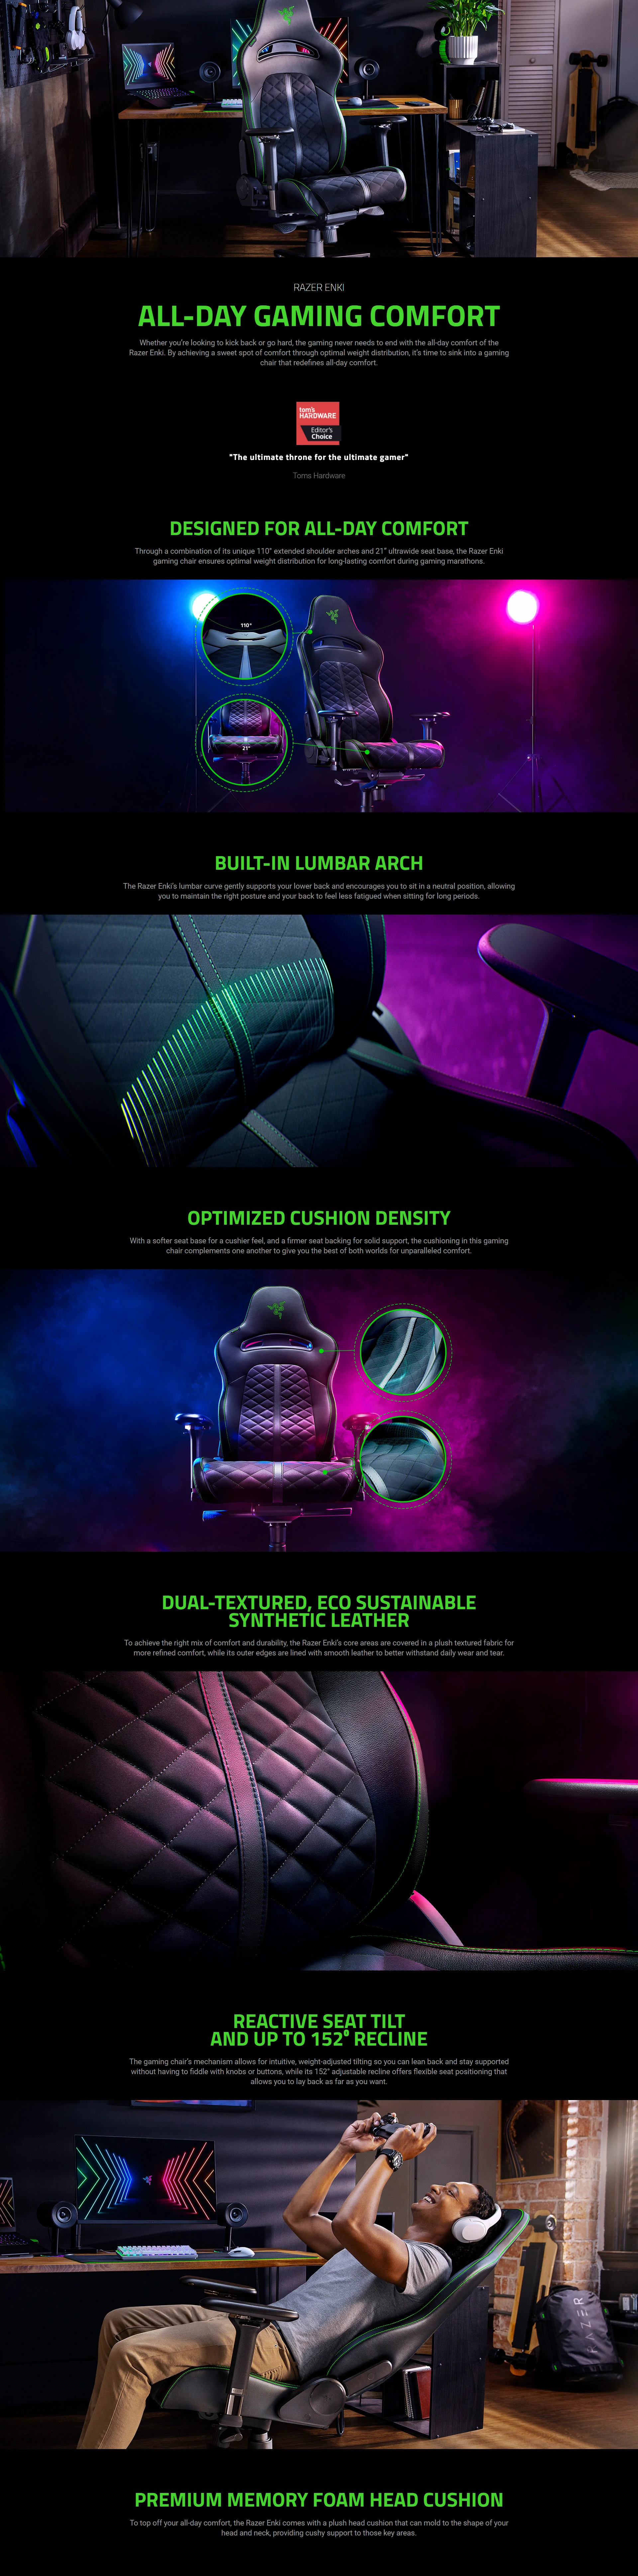 Overview - Razer Enki Gaming Chair